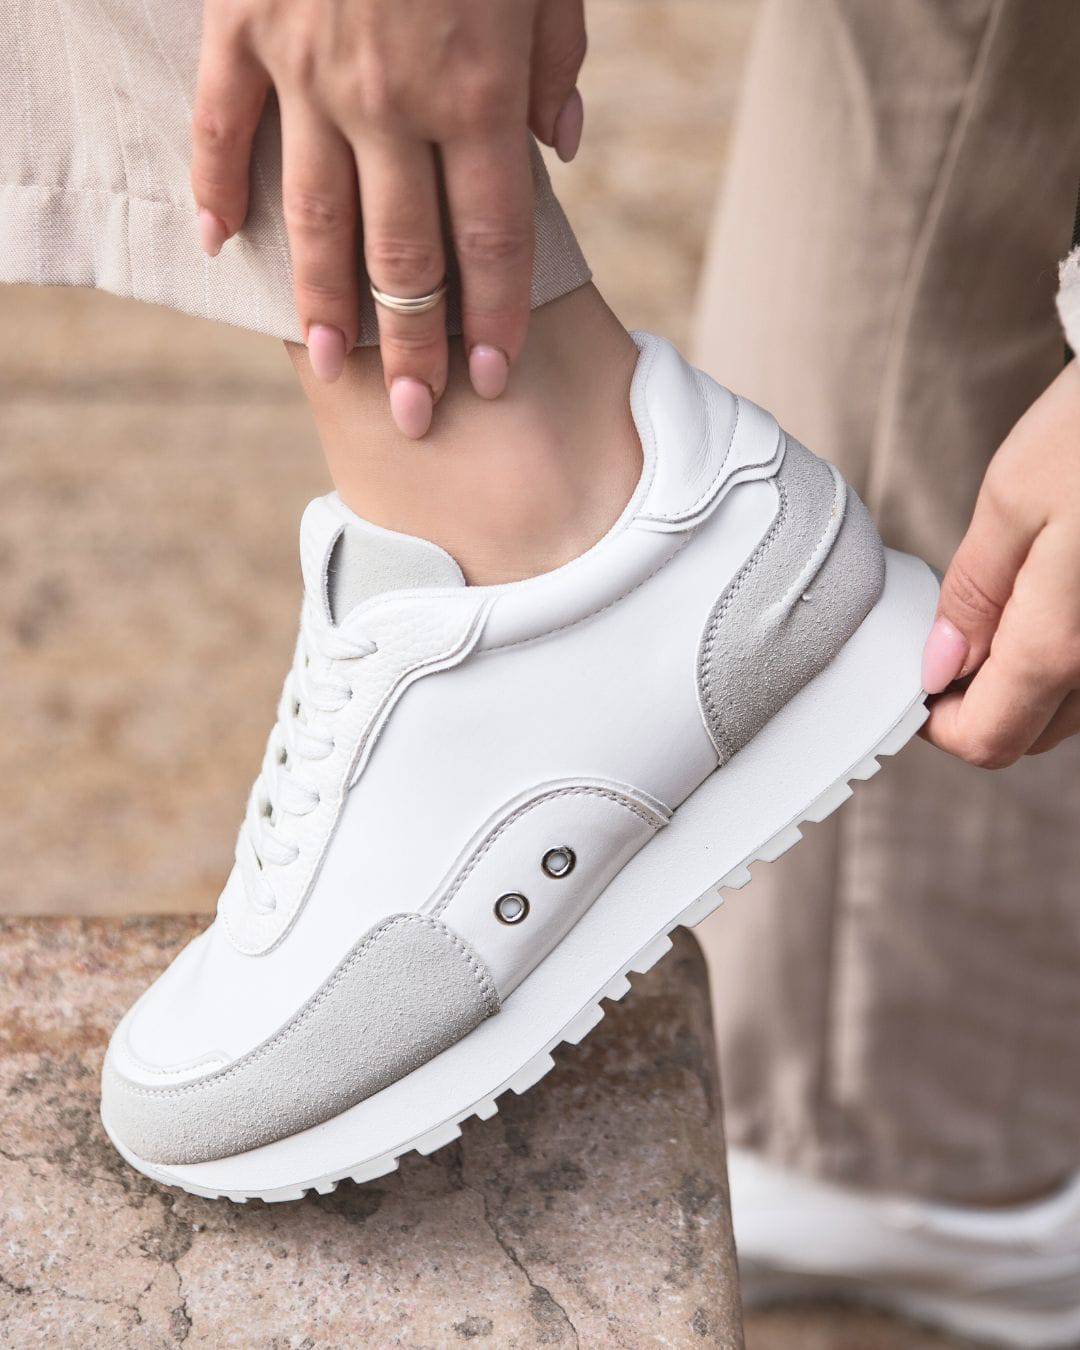 Damen-Sneaker in Weiß mit Schnürsenkeln - Louisa - Casualmode.de